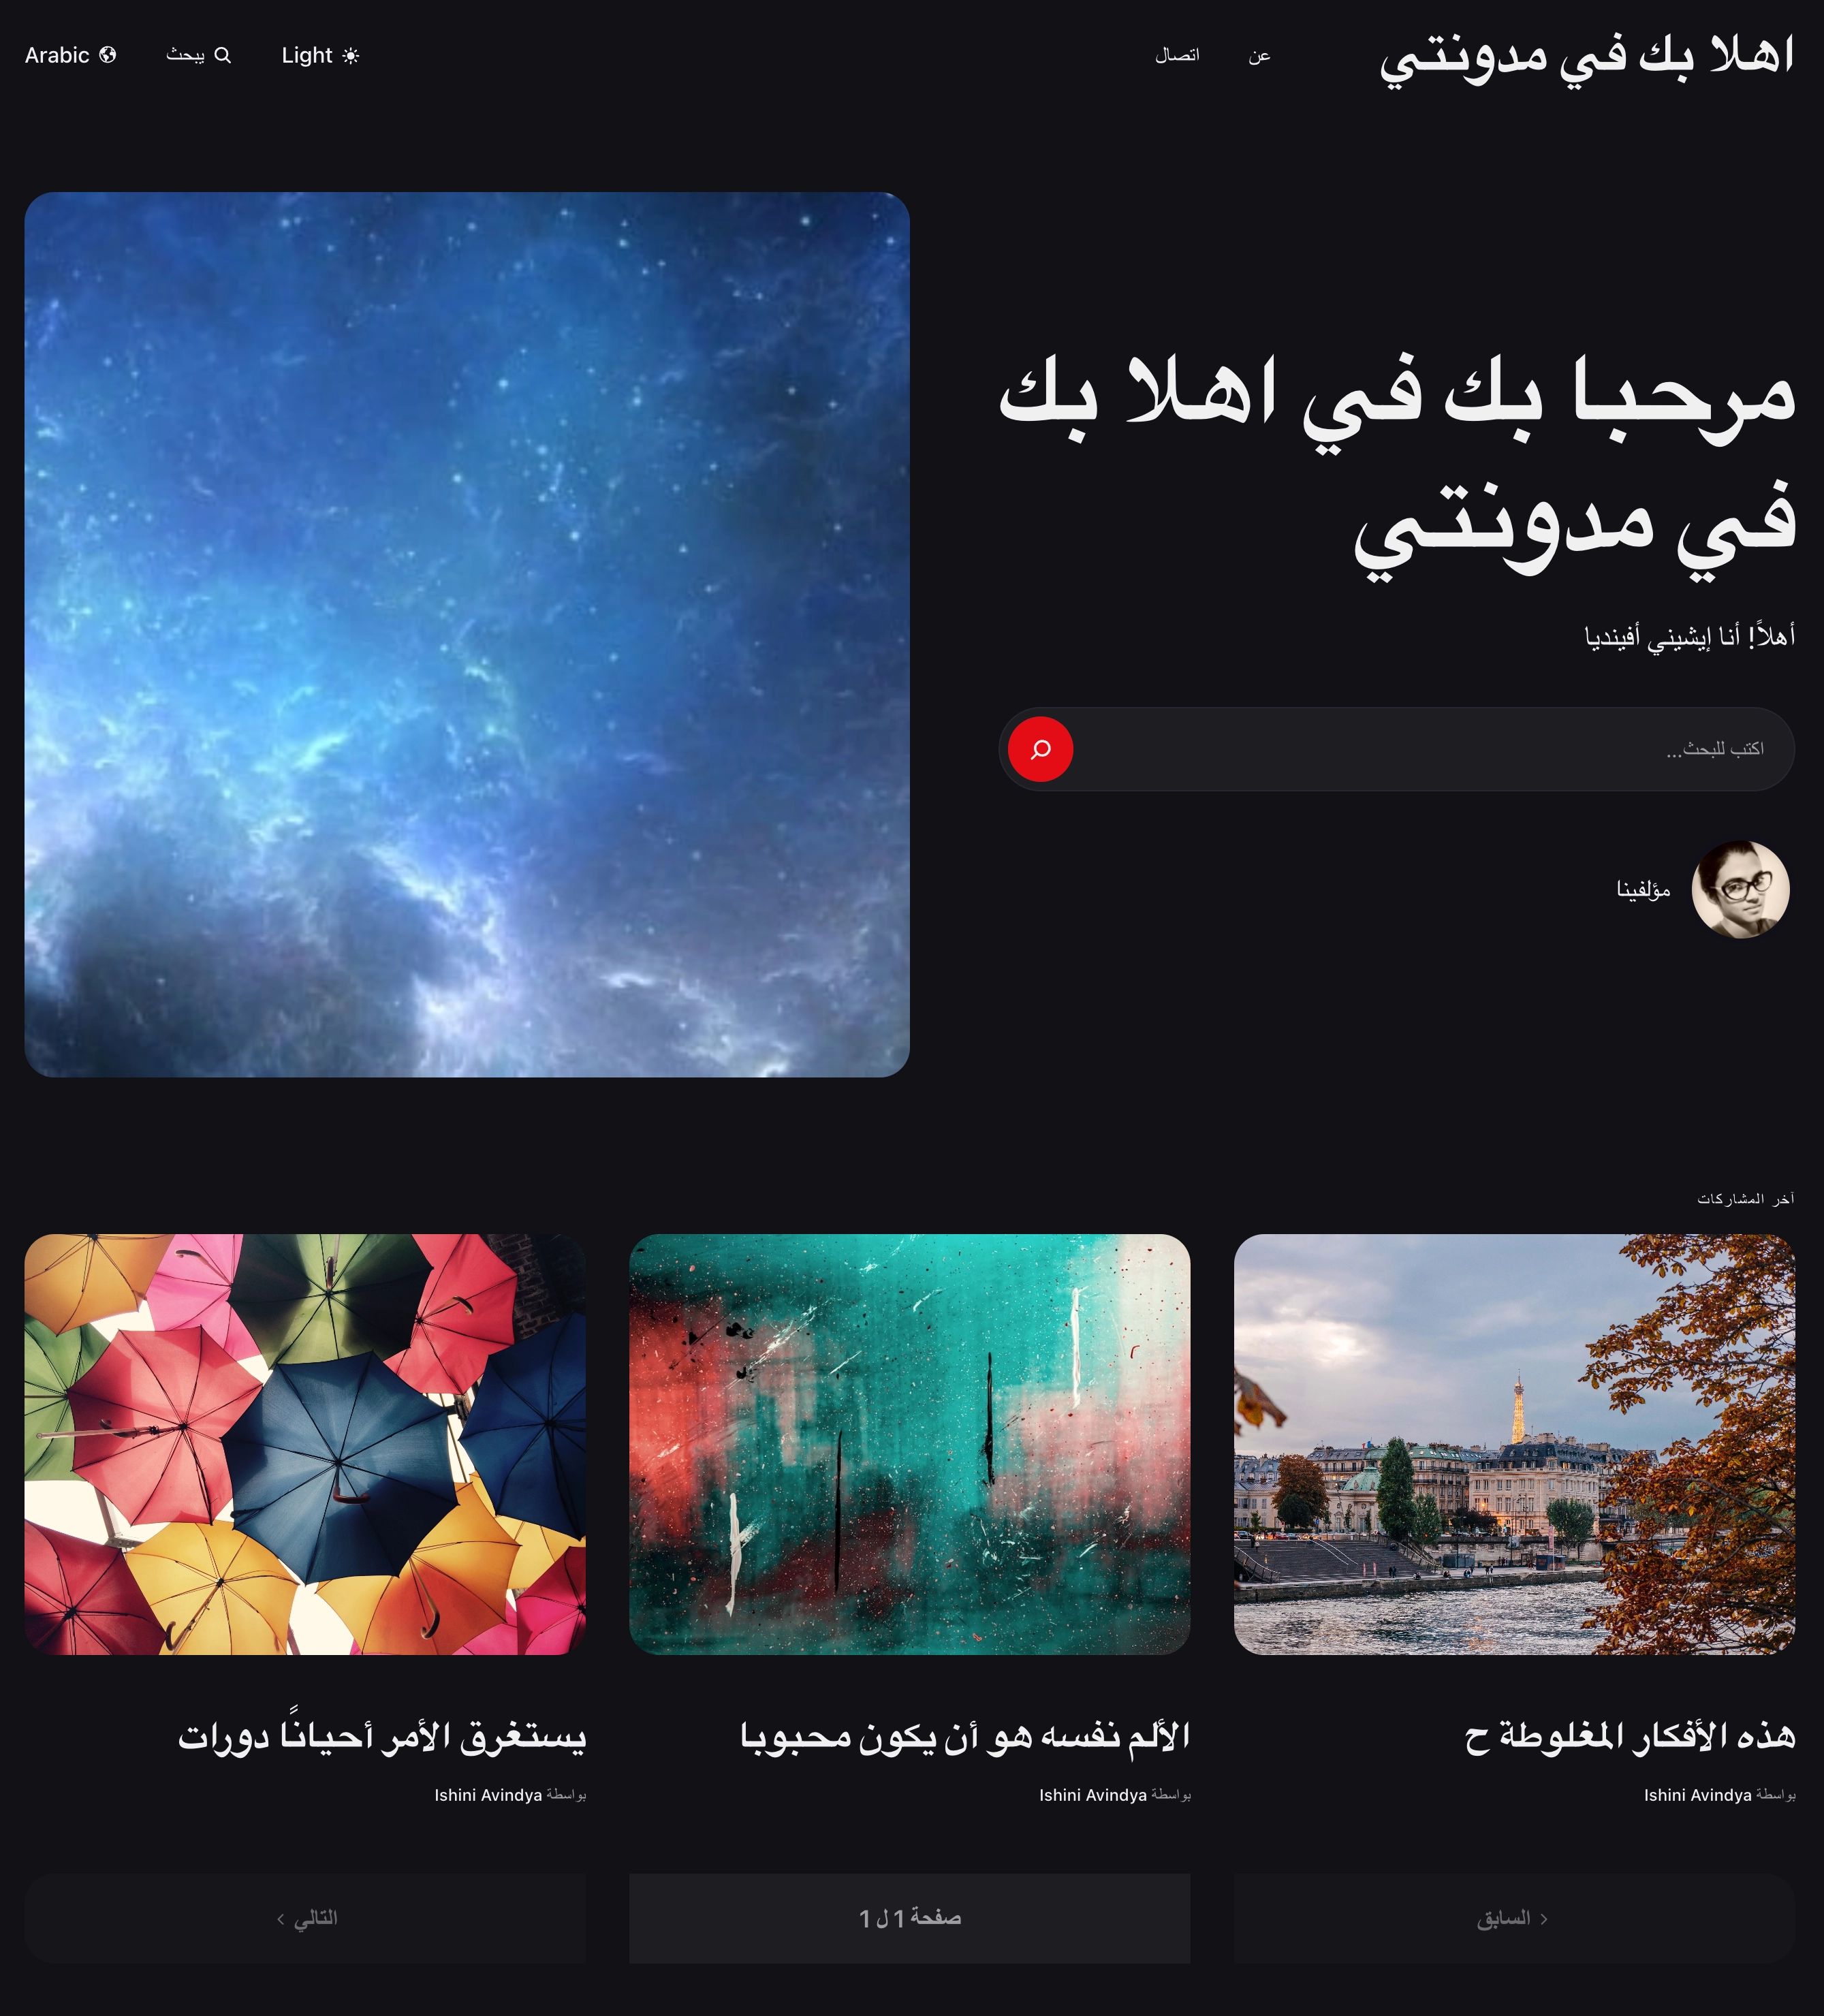 Ishini’s blog in Arabic - Hyvor Blogs